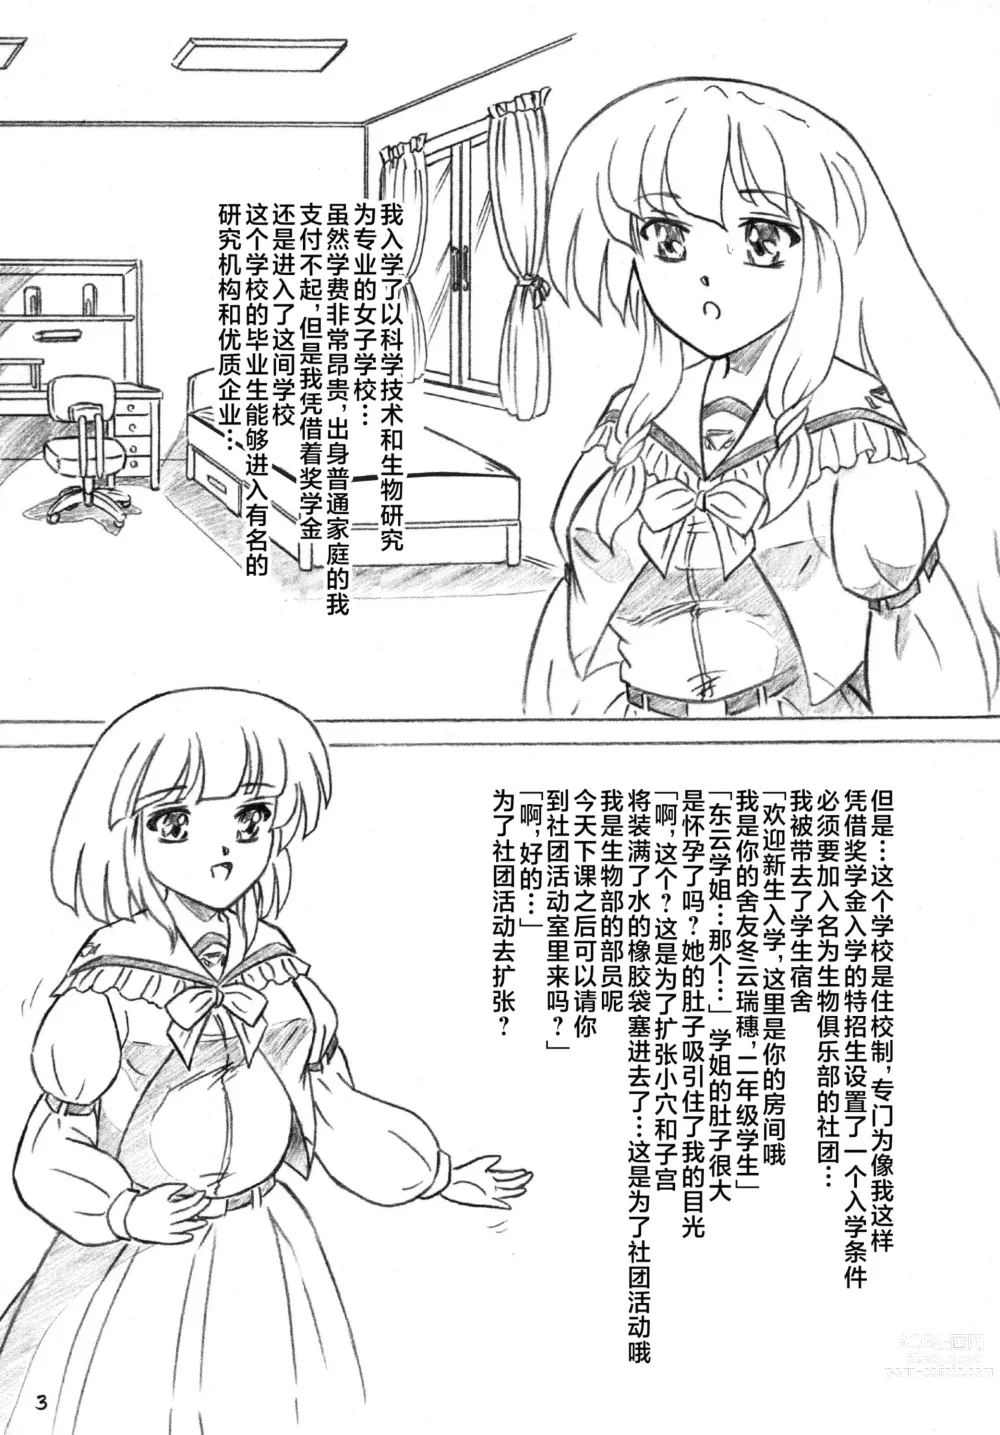 Page 2 of doujinshi Ikimono Club